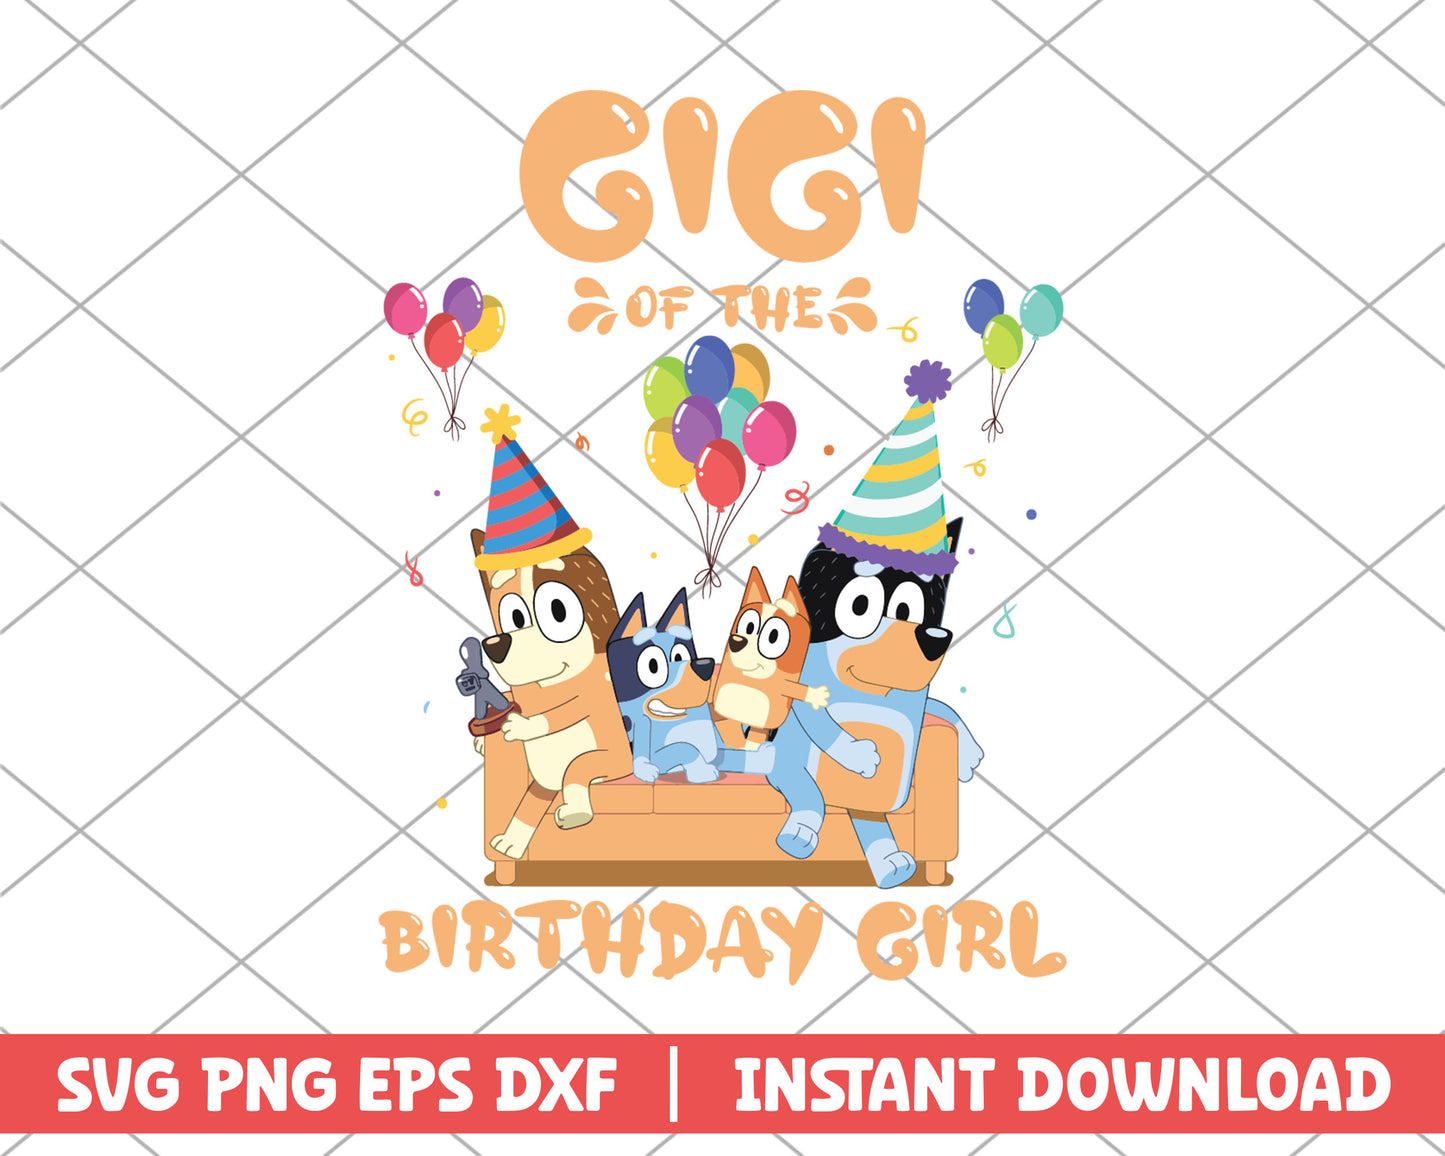 Gigi of the birthday girl cartoon svg 